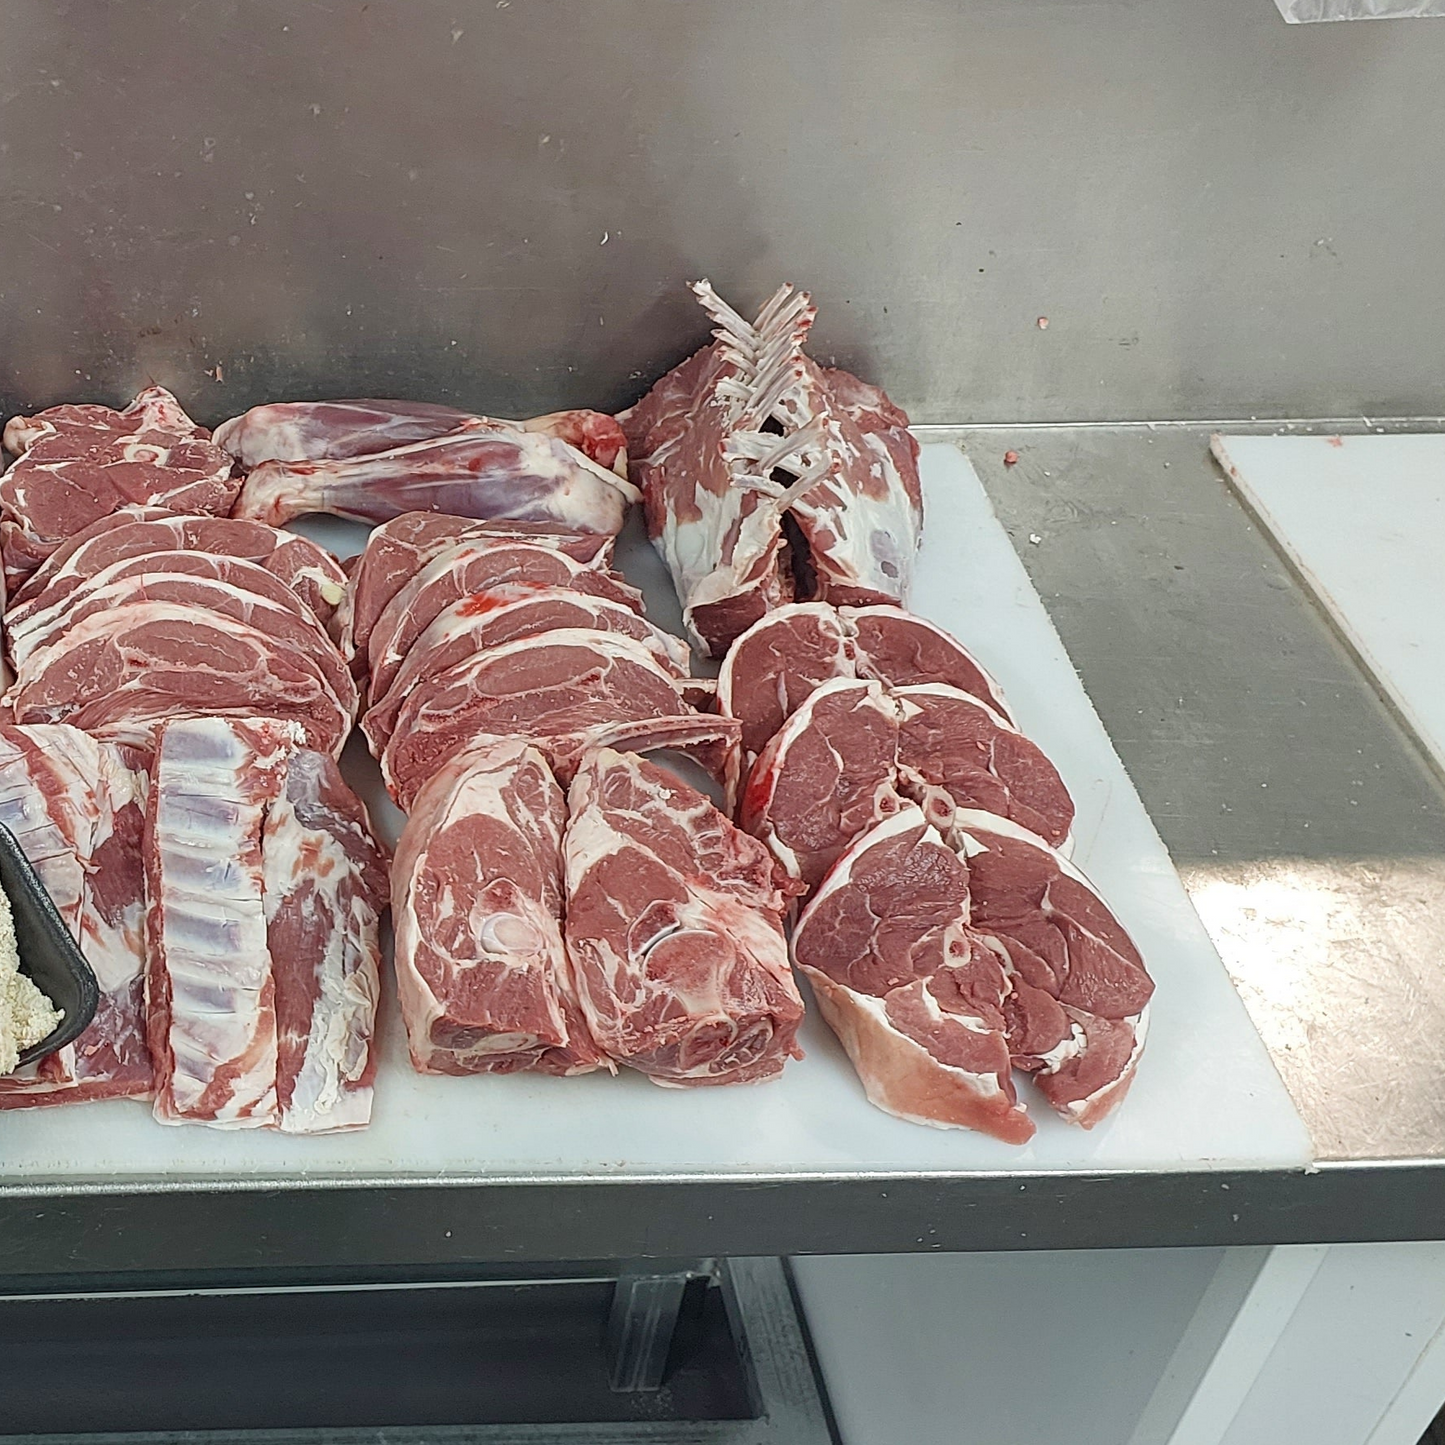 Whole Lamb Special - $9.50/kg